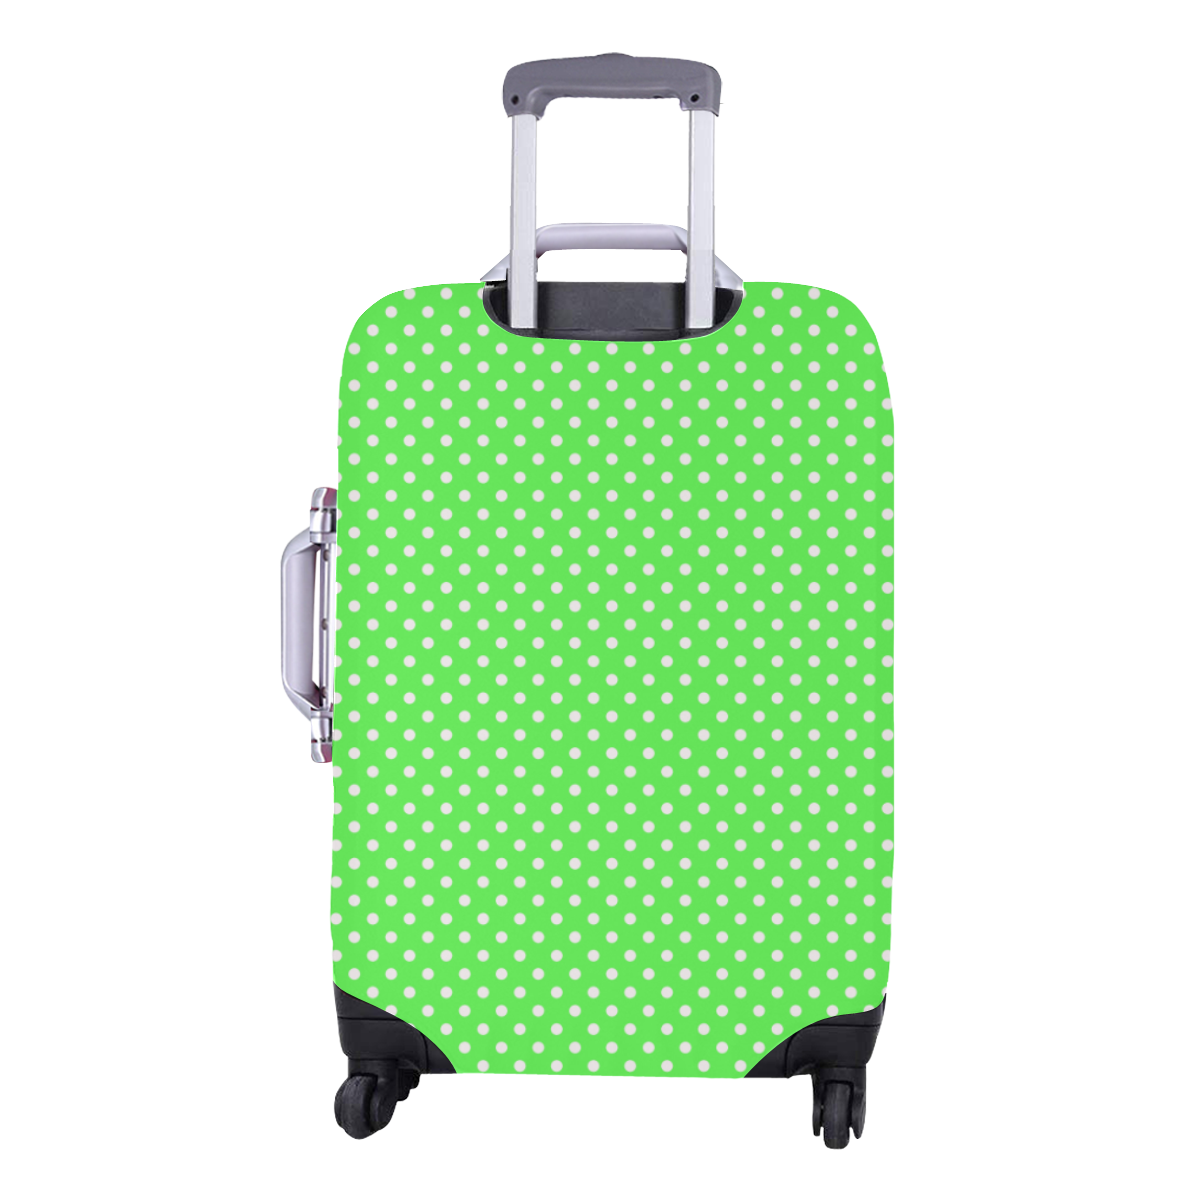 Eucalyptus green polka dots Luggage Cover/Medium 22"-25"